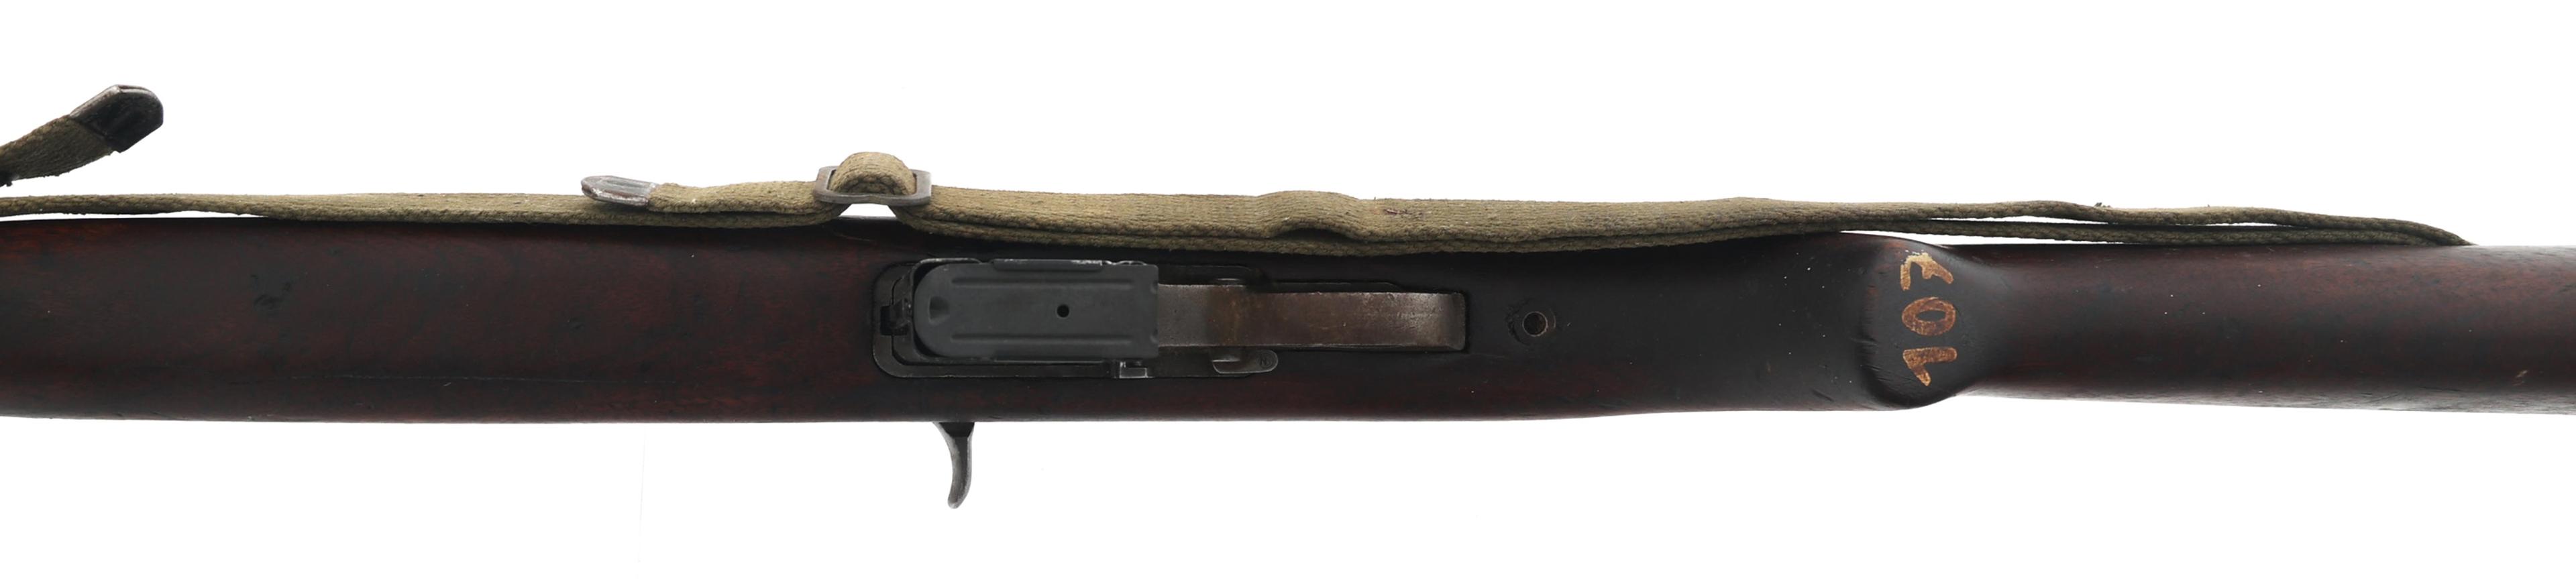 WWII US WINCHESTER MODEL M1 .30 CALIBER CARBINE